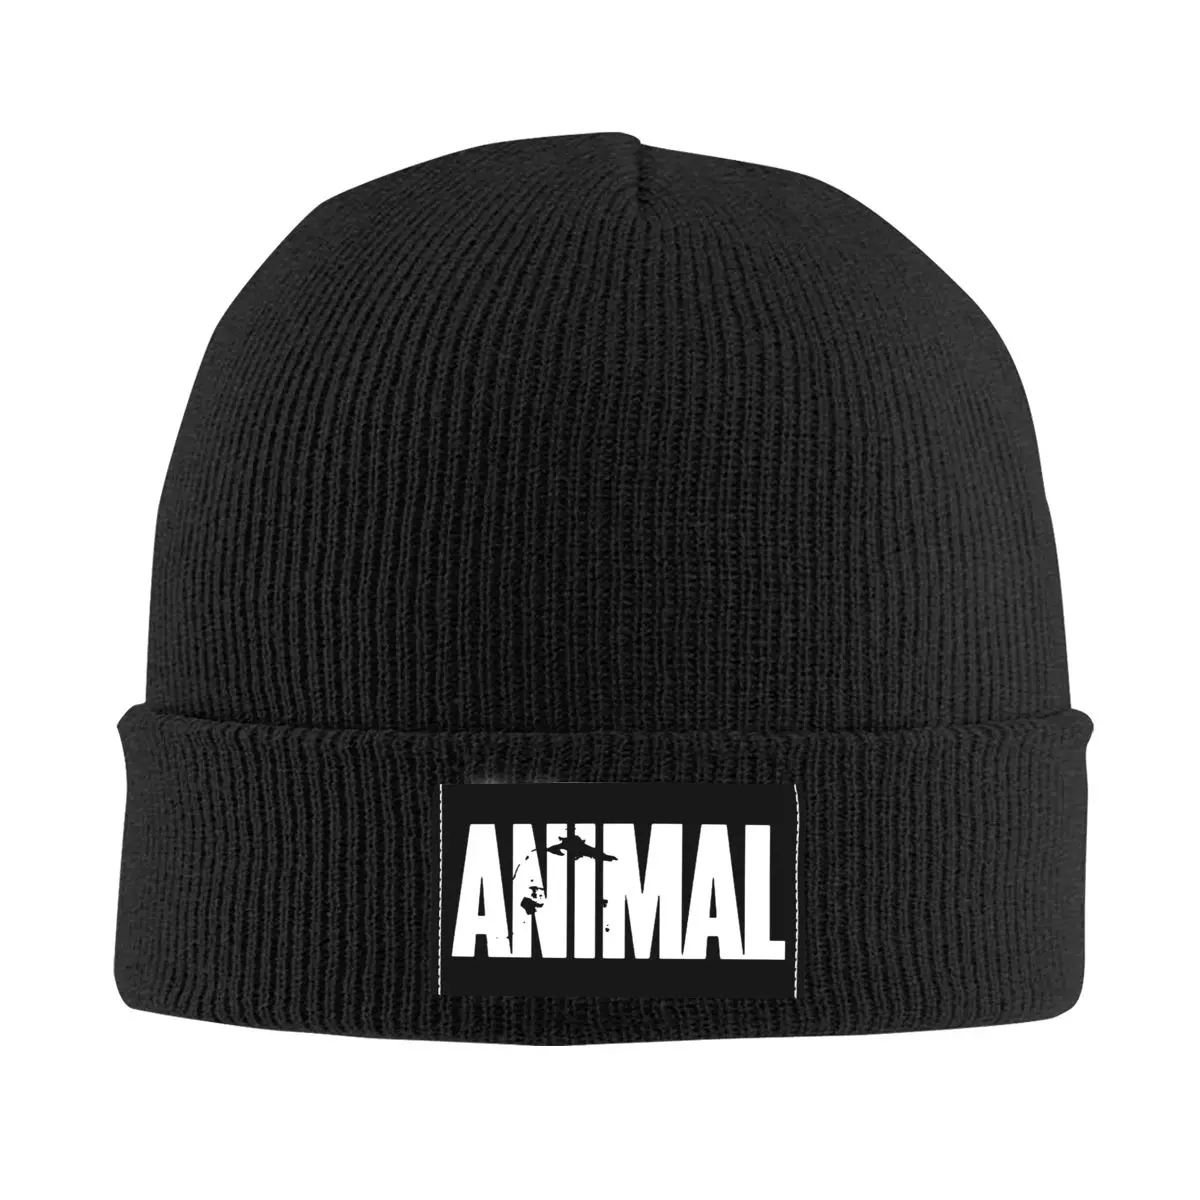 Animal Training Bonnet Hats Fashion Knitted Hat For Men Women Warm Winter Bodybuilding Fitness Gym Skullies Beanies Caps 1